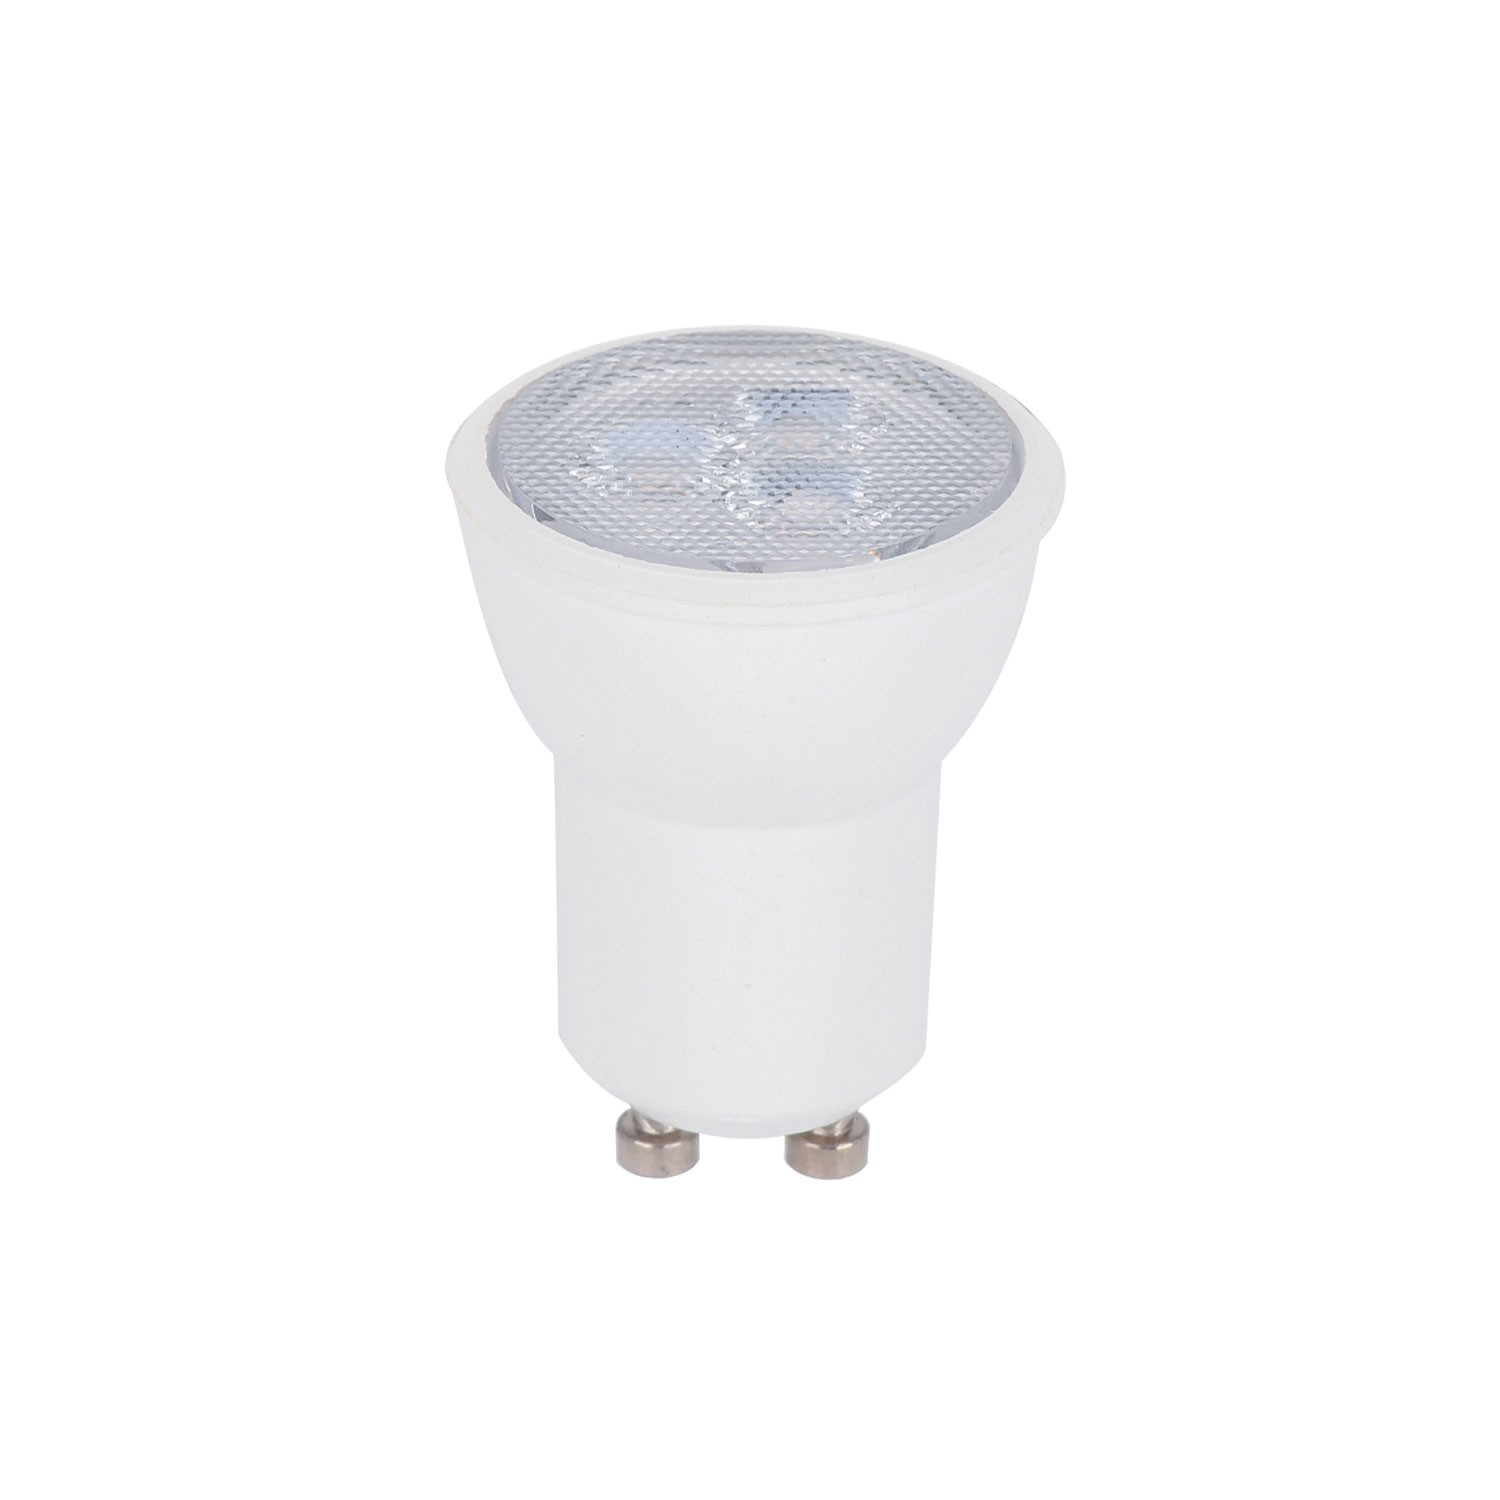 Mini Spotlight GU1d0 lamp with SnakeBis wiring